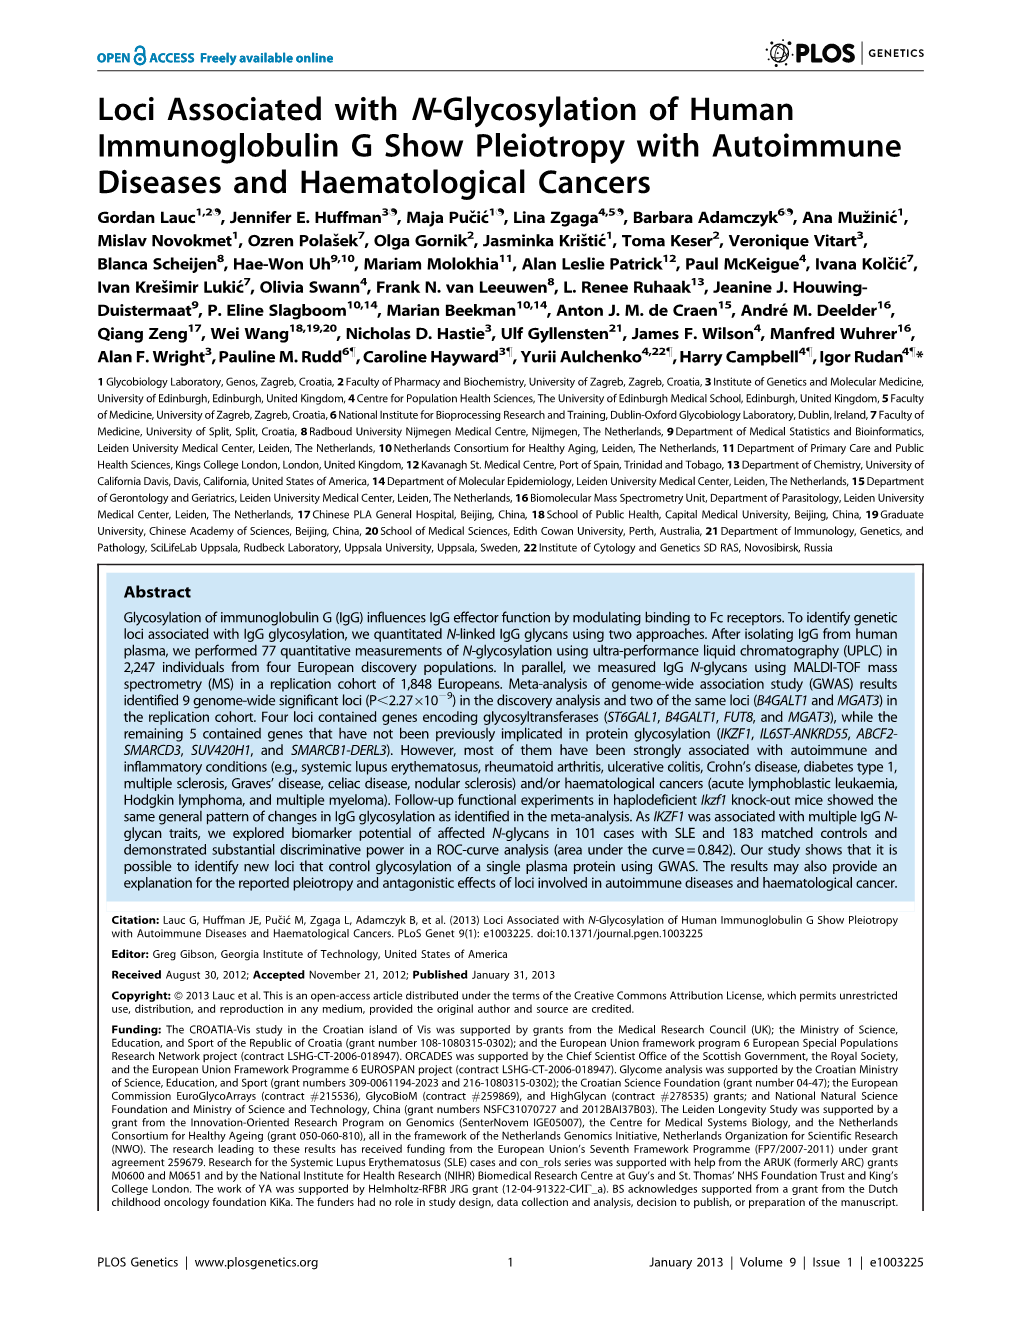 Loci Associated with N-Glycosylation of Human Immunoglobulin G Show Pleiotropy with Autoimmune Diseases and Haematological Cancers Gordan Lauc1,2., Jennifer E